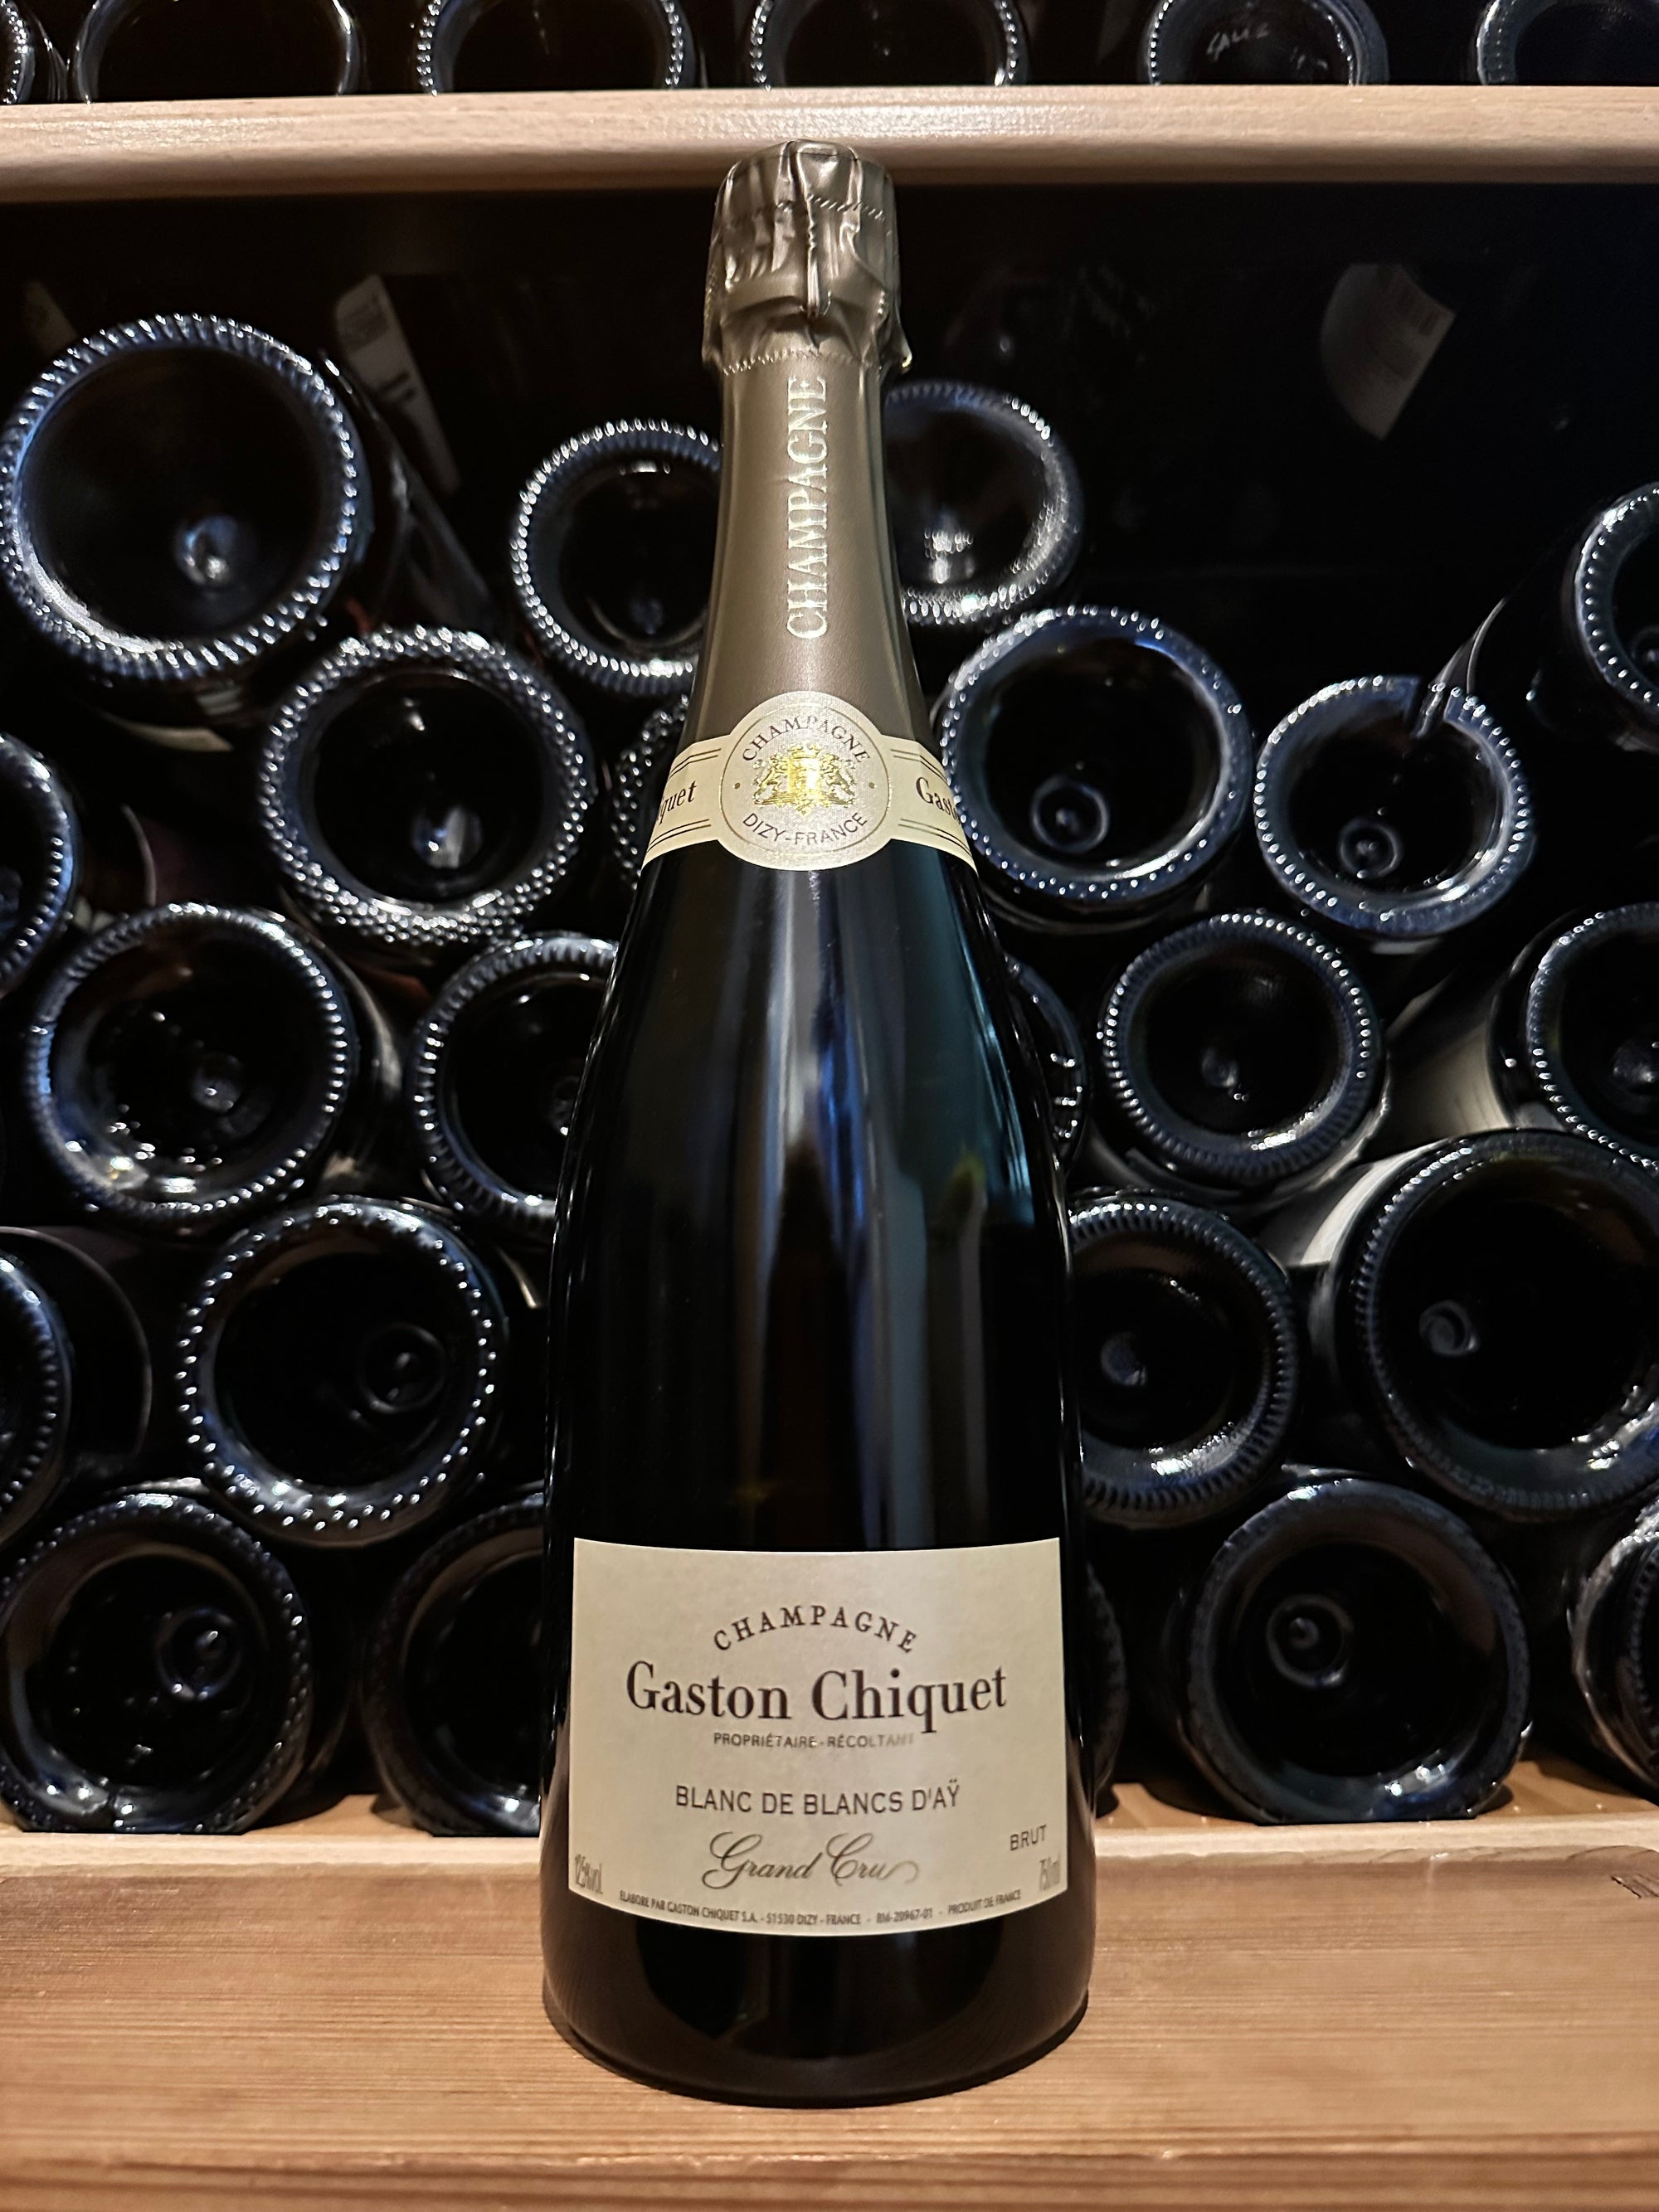 Gaston Chiquet Champagne Brut Blanc de Blancs d'Ay Grand Cru